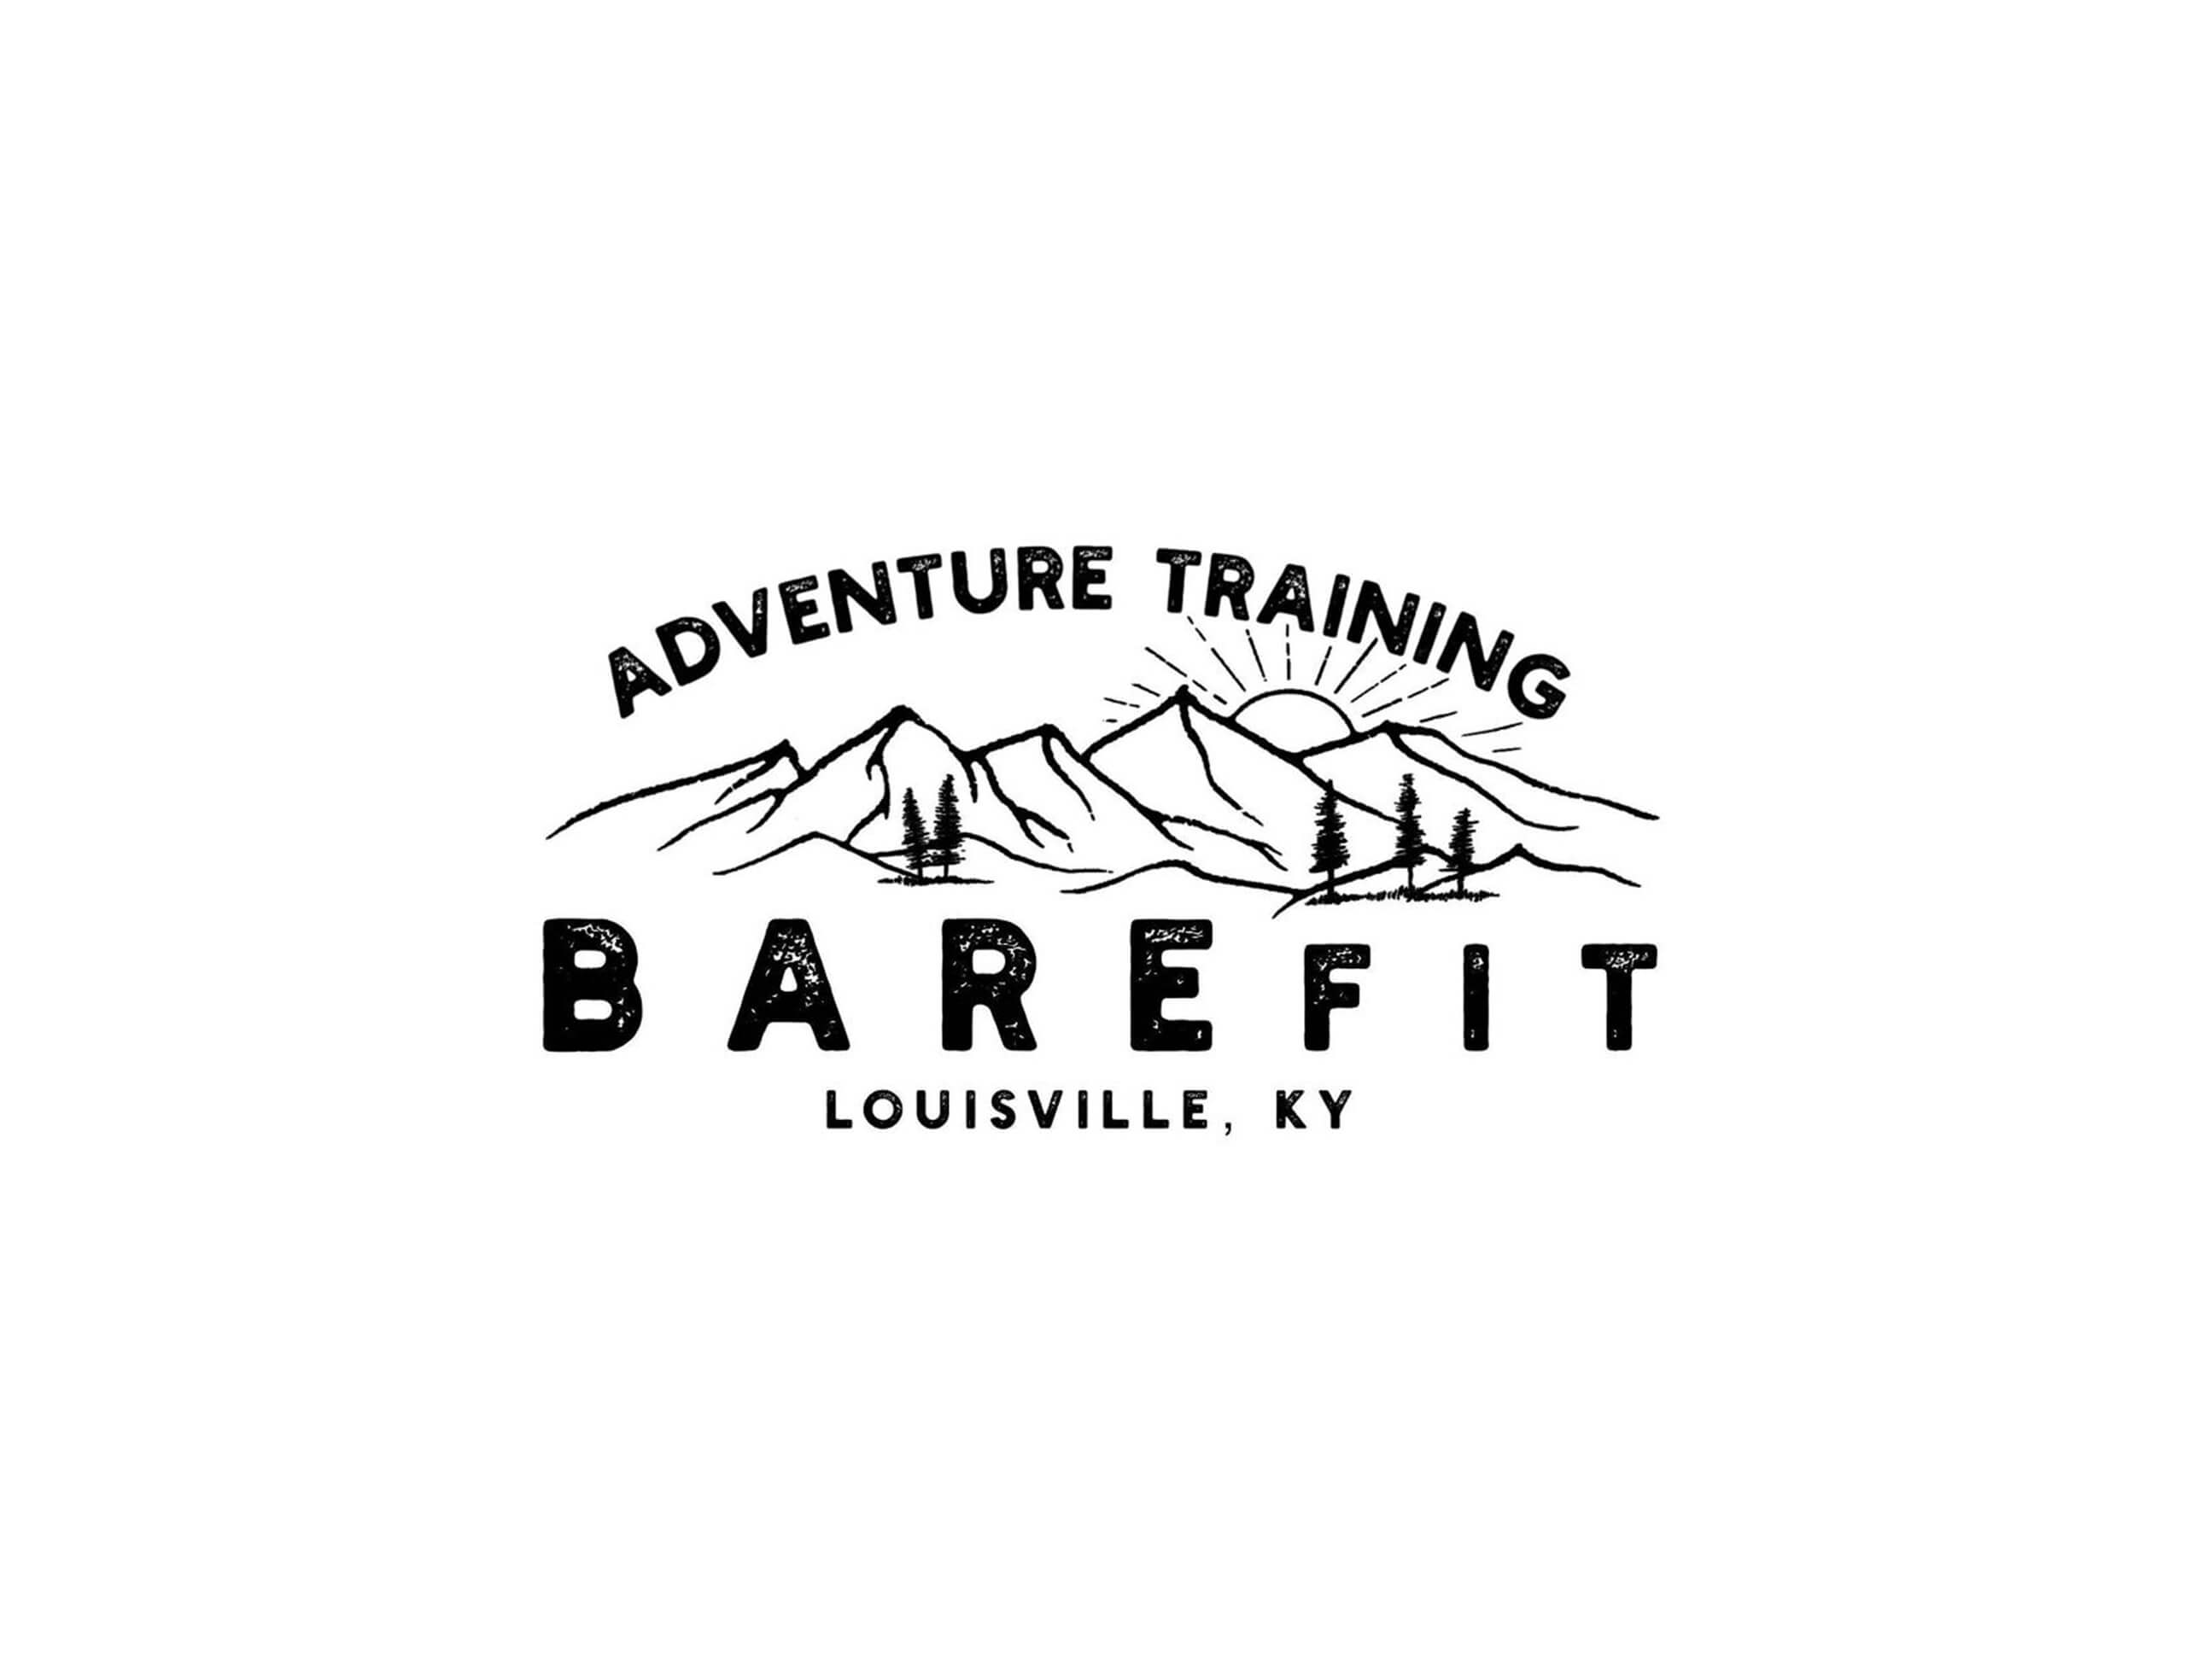 BAREFIT Adventure Training